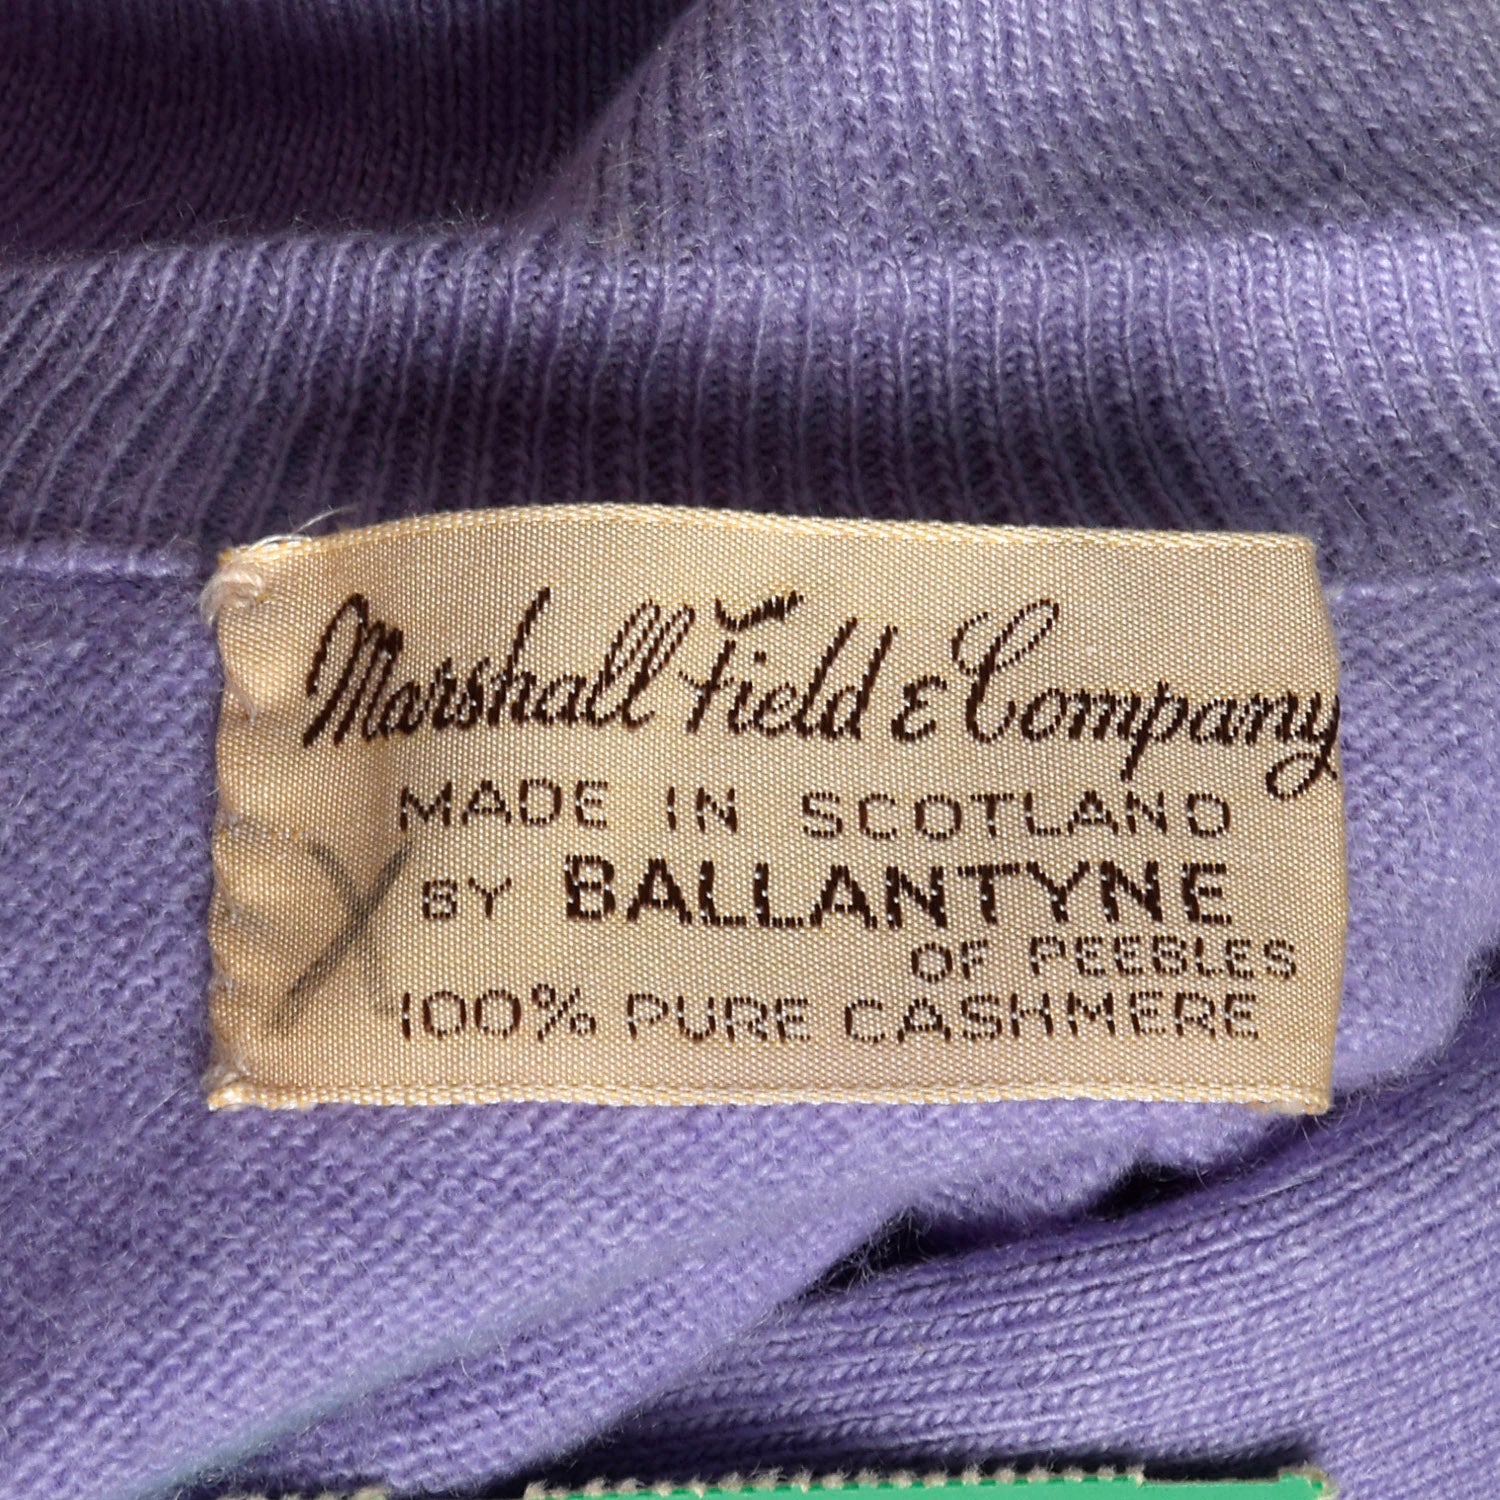 Medium 1950s Ballantyne of Peebles Cashmere Sweater